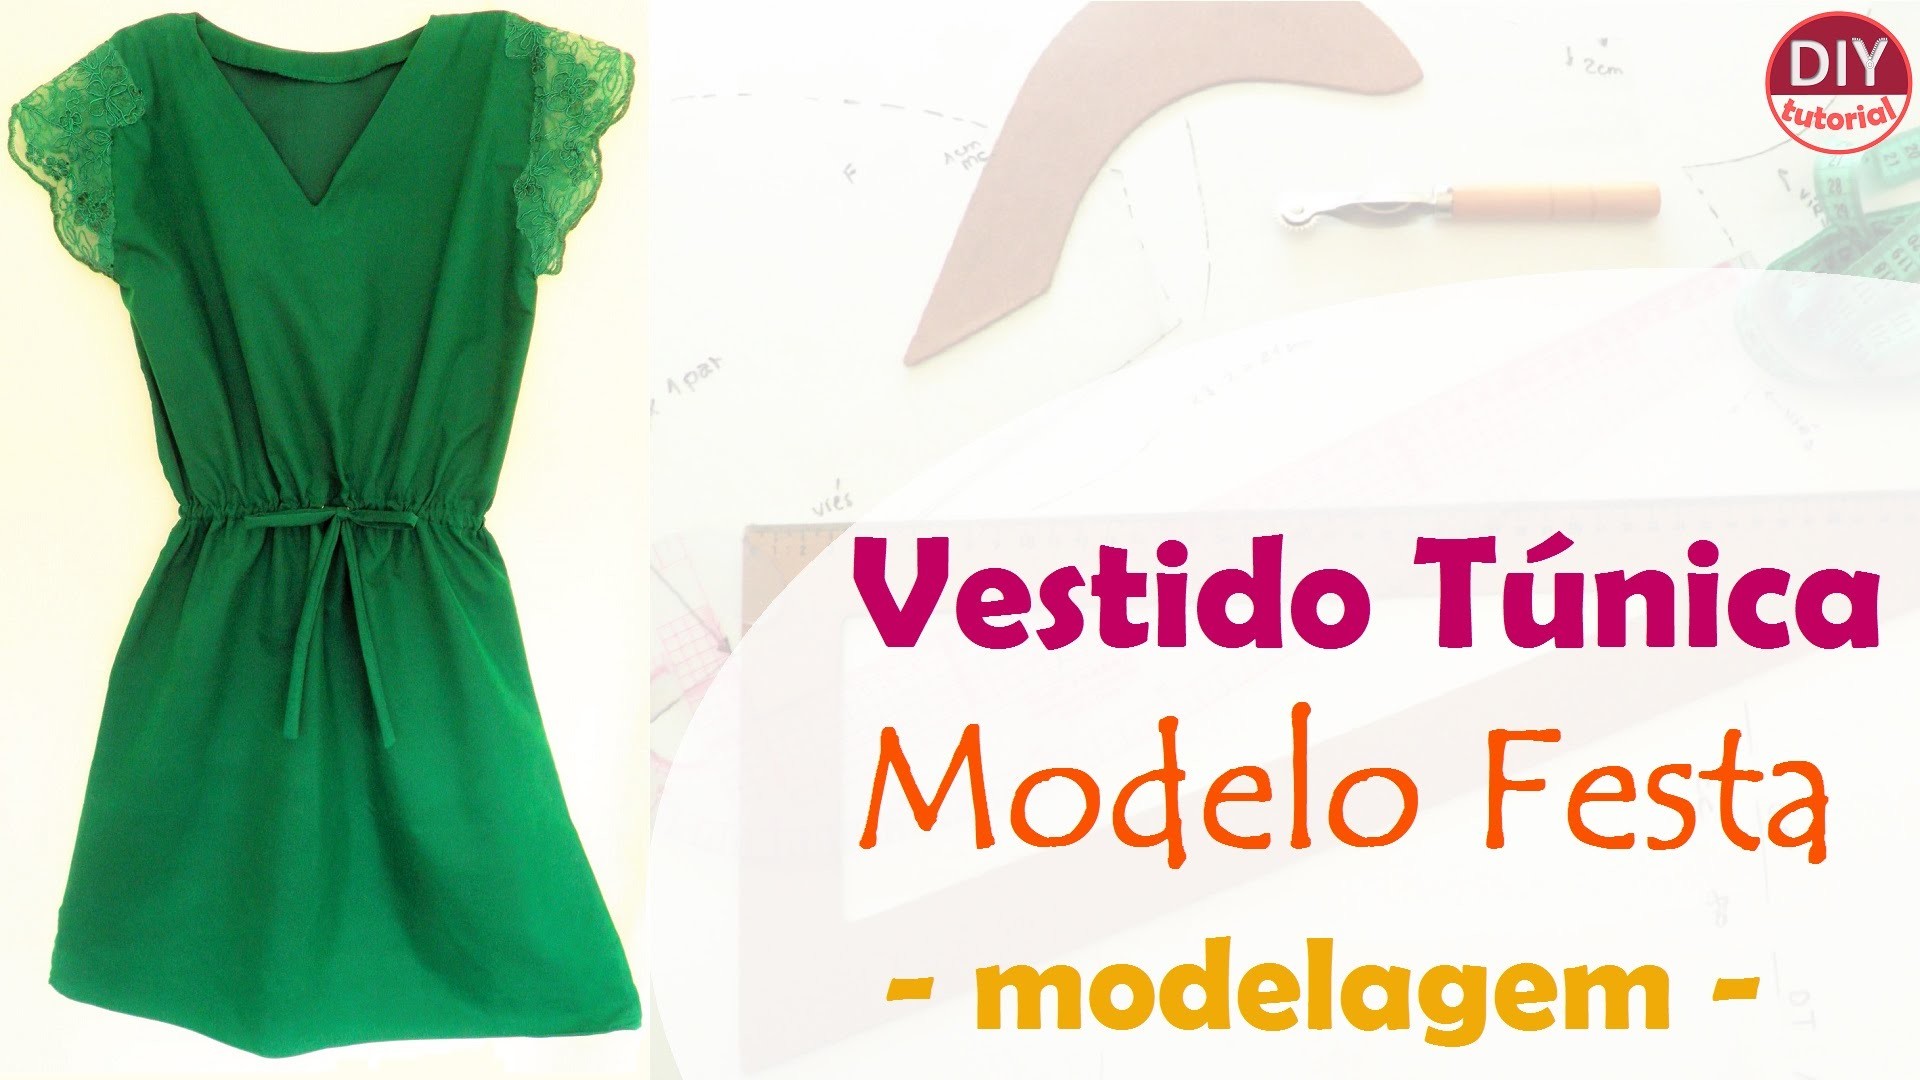 Vestido Túnica - Modelo Festa - Parte 1: MODELAGEM (DIY Tutorial) - VEDA#29